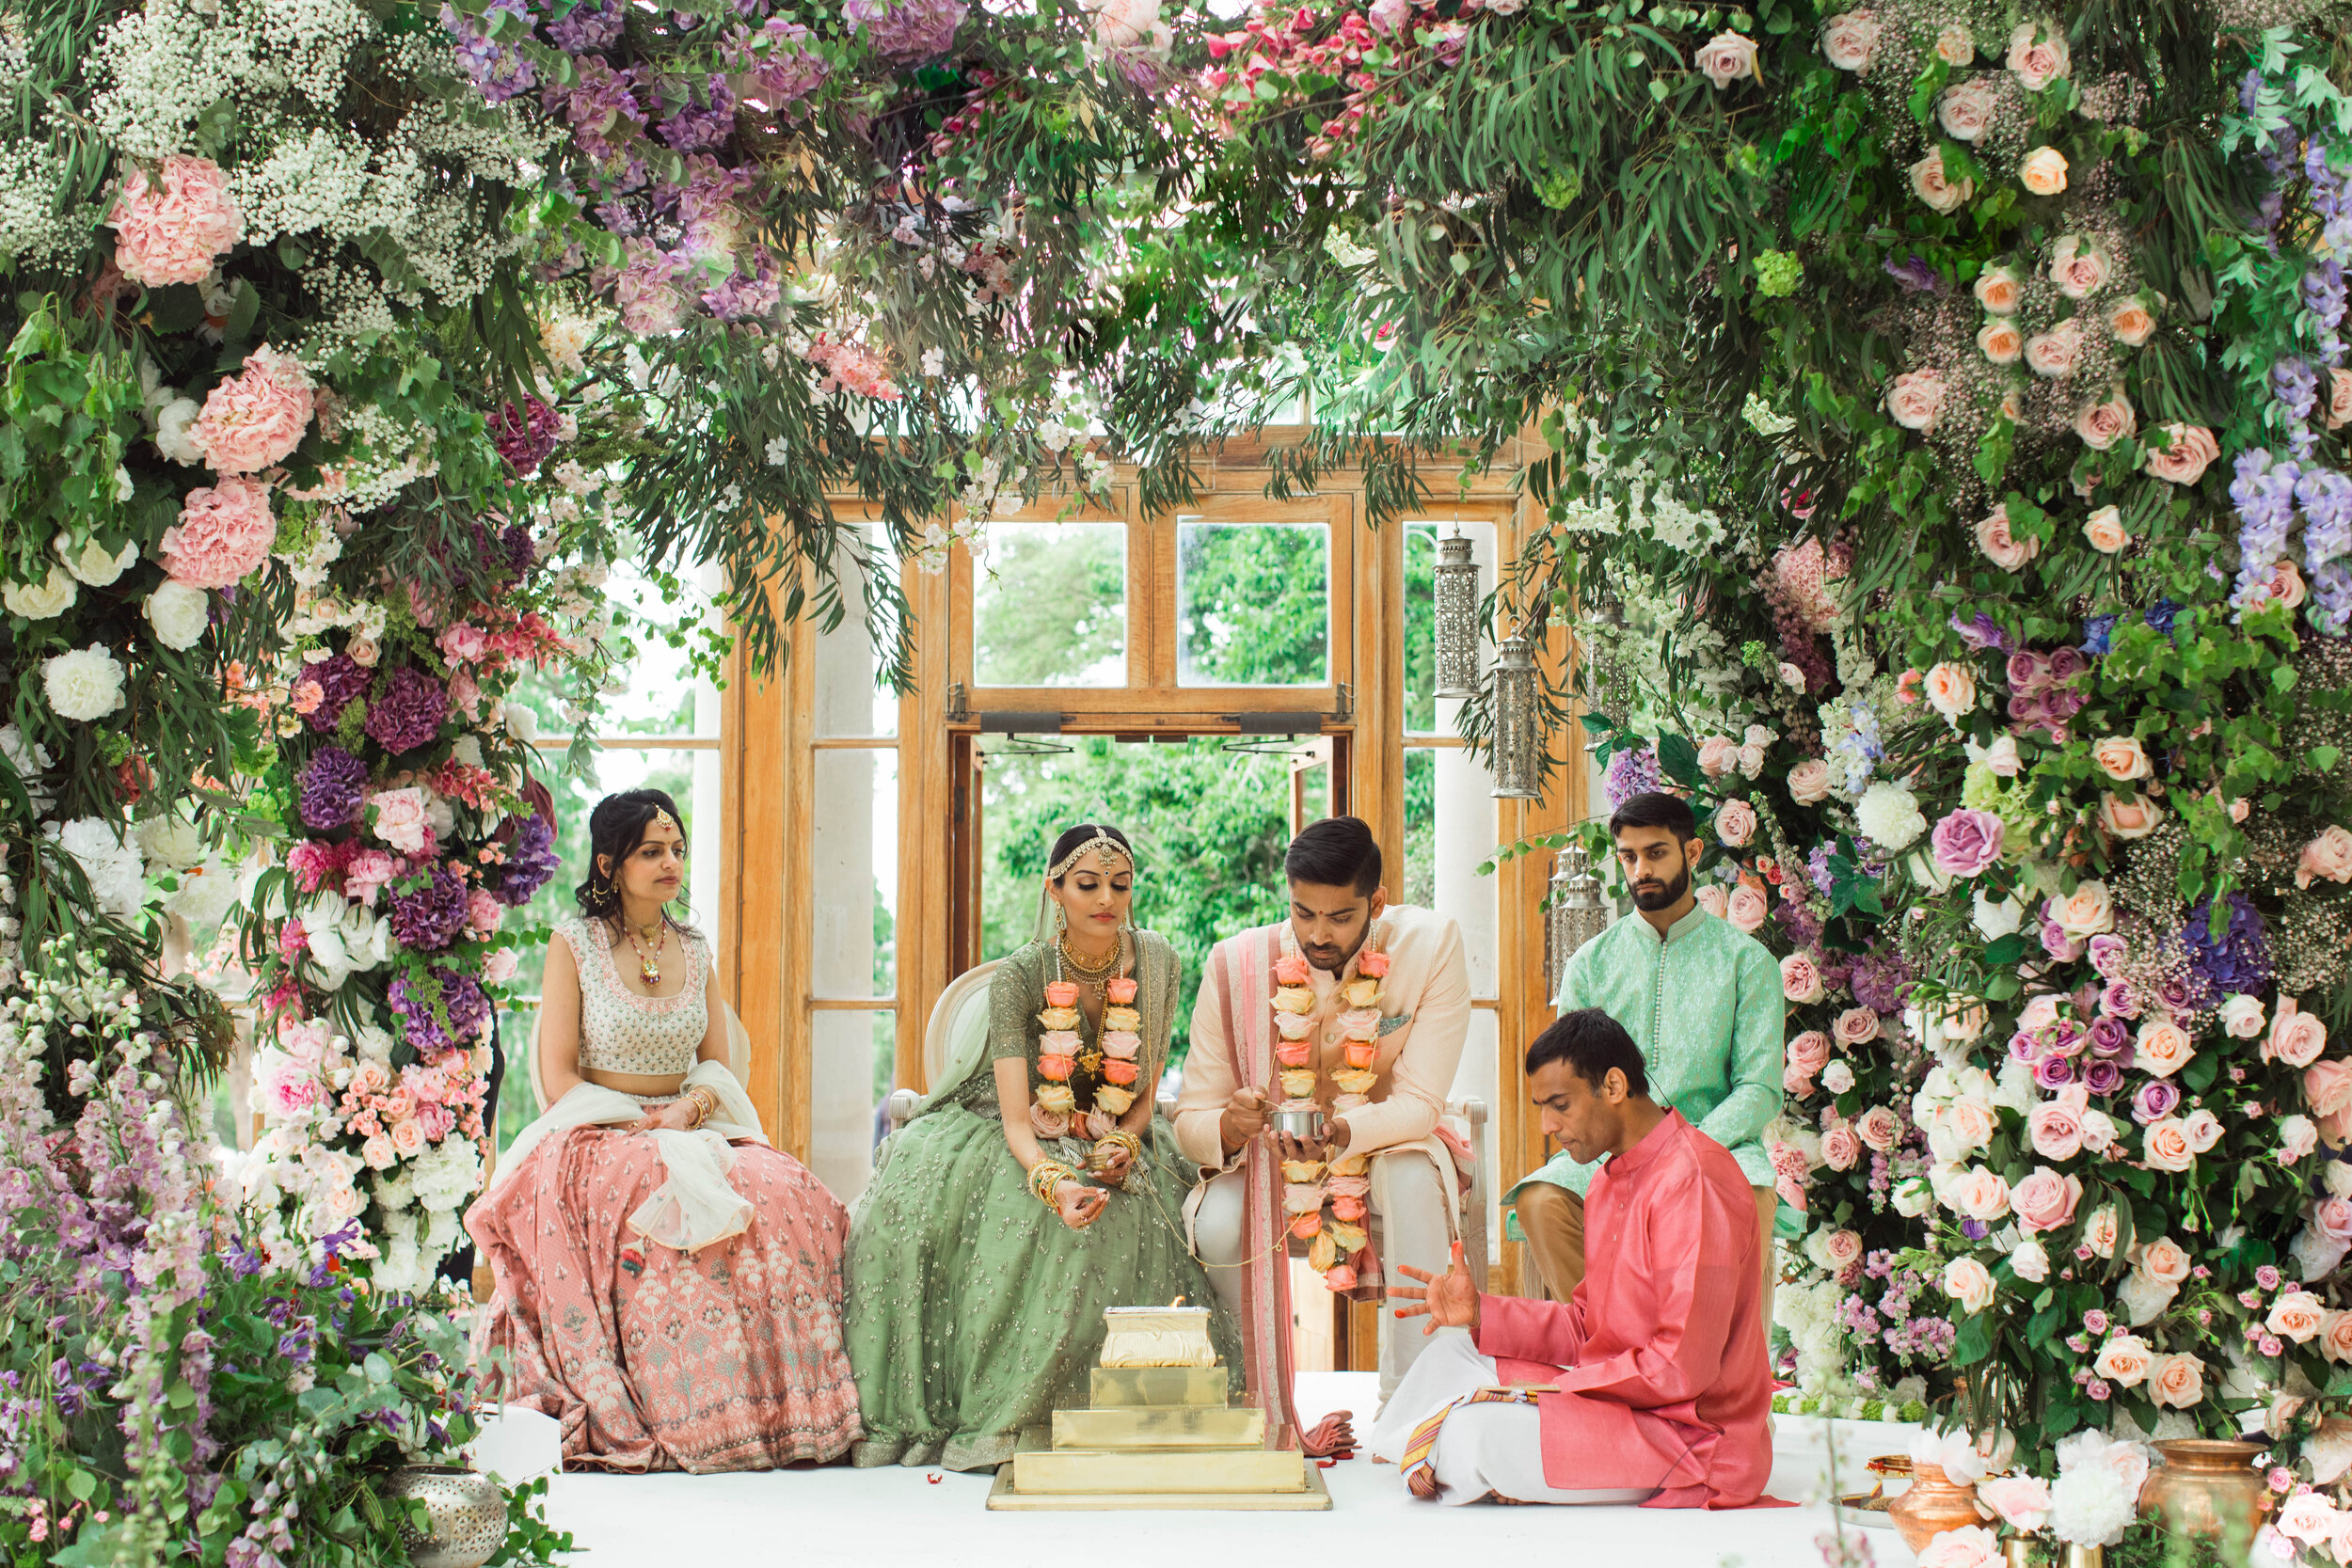 Zohaib Ali Kew Gardens Wedding Photographer.jpg